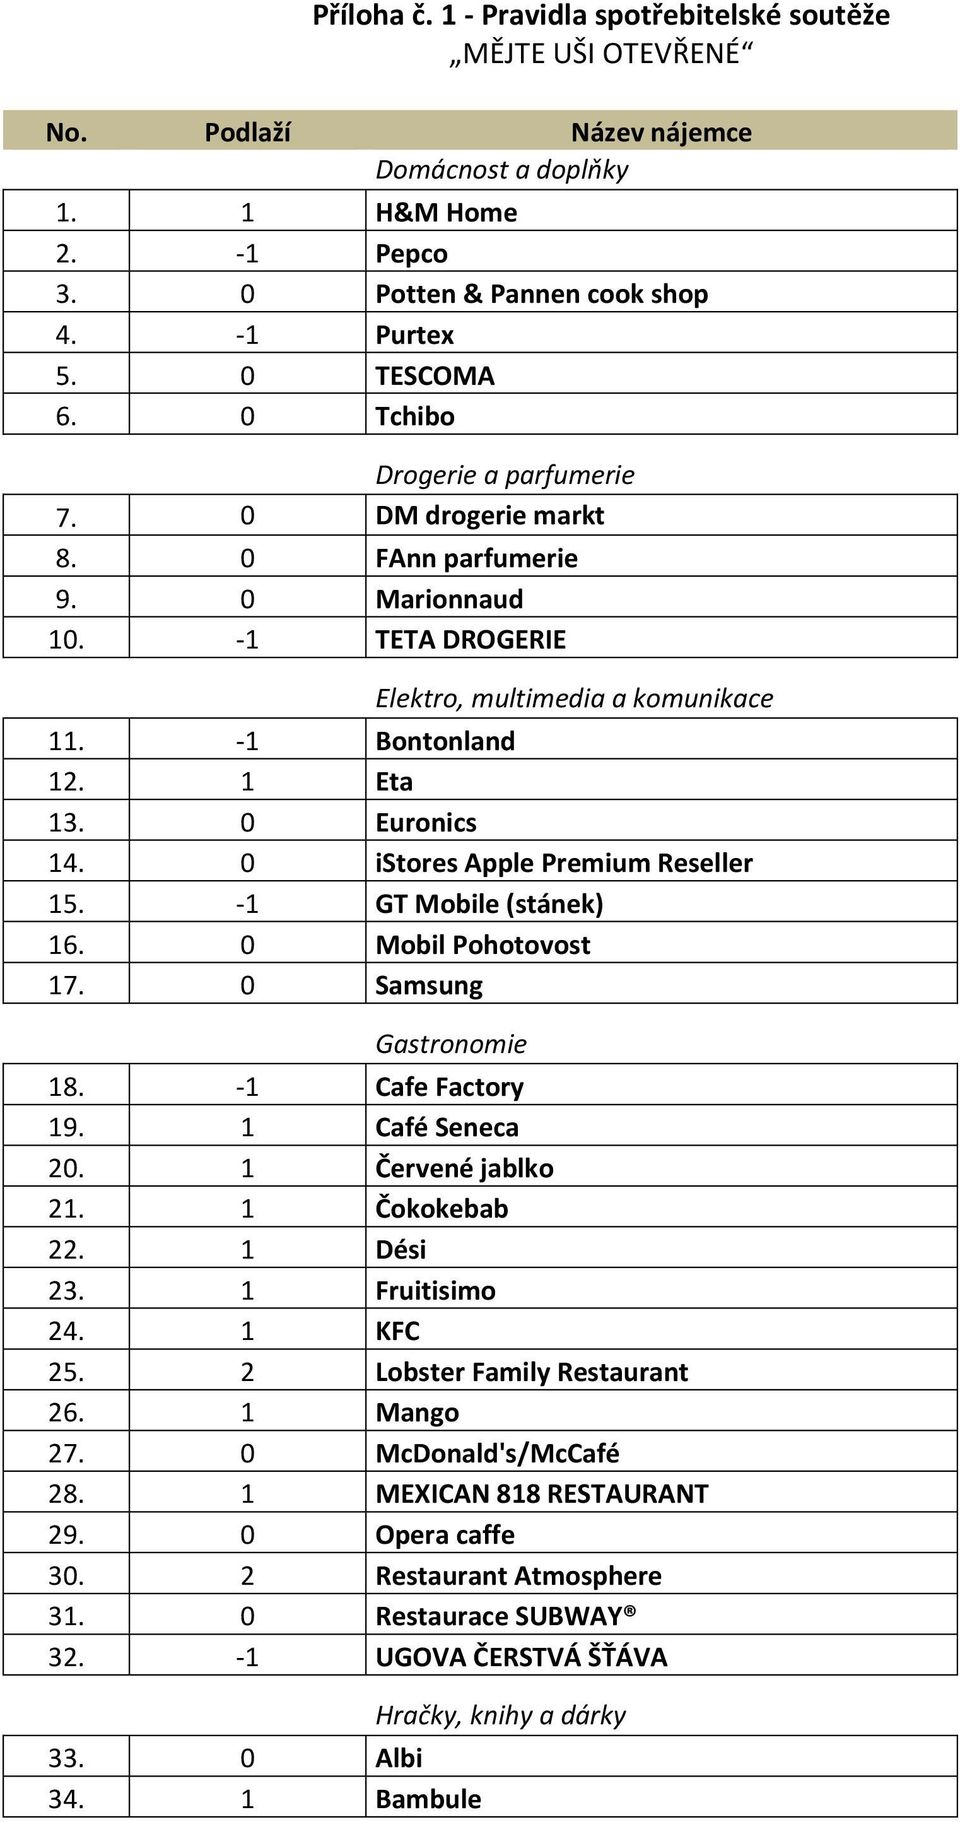 0 istores Apple Premium Reseller 15. -1 GT Mobile (stánek) 16. 0 Mobil Pohotovost 17. 0 Samsung Gastronomie 18. -1 Cafe Factory 19. 1 Café Seneca 20. 1 Červené jablko 21. 1 Čokokebab 22. 1 Dési 23.